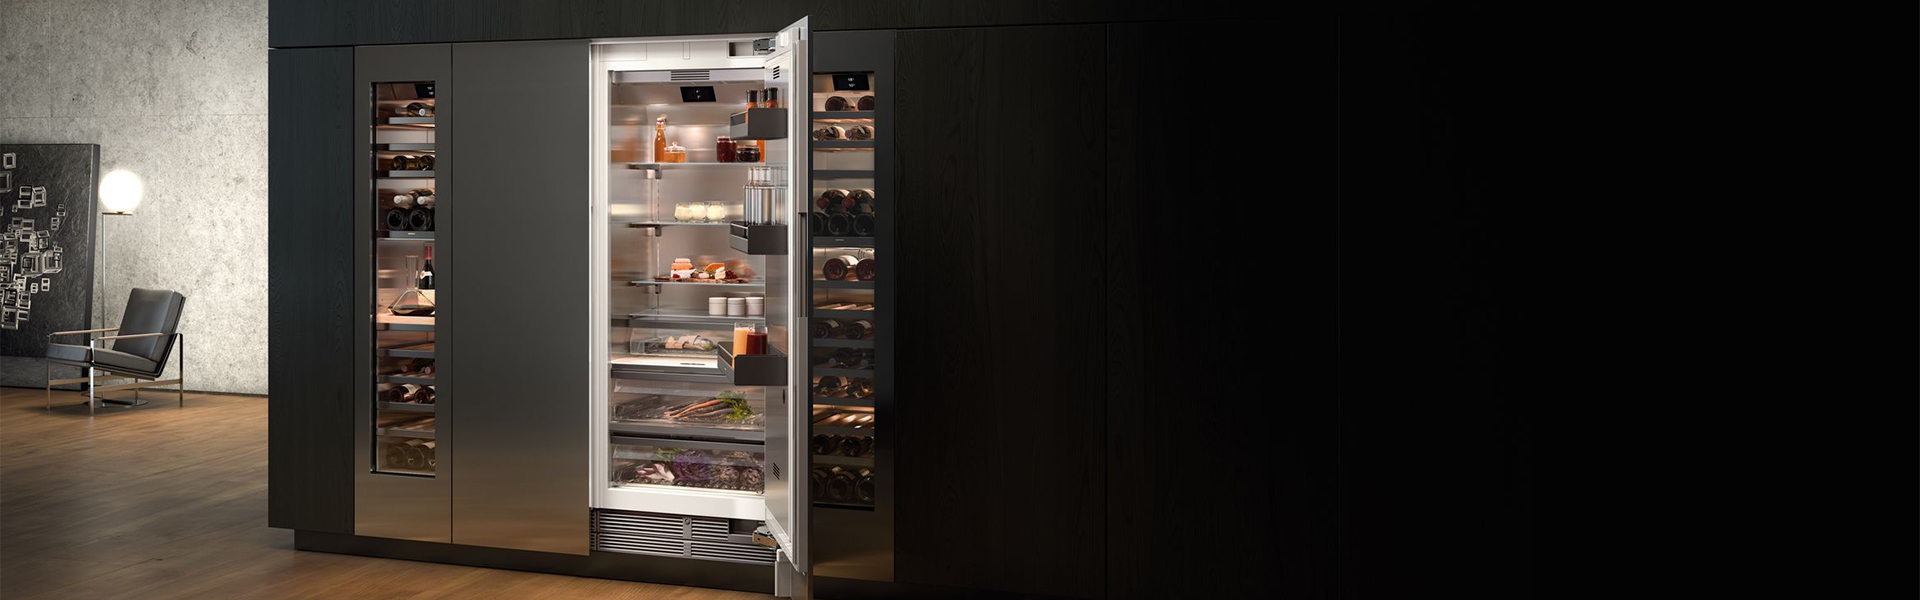 Gaggenau fridge freezer with ice and water dispenser